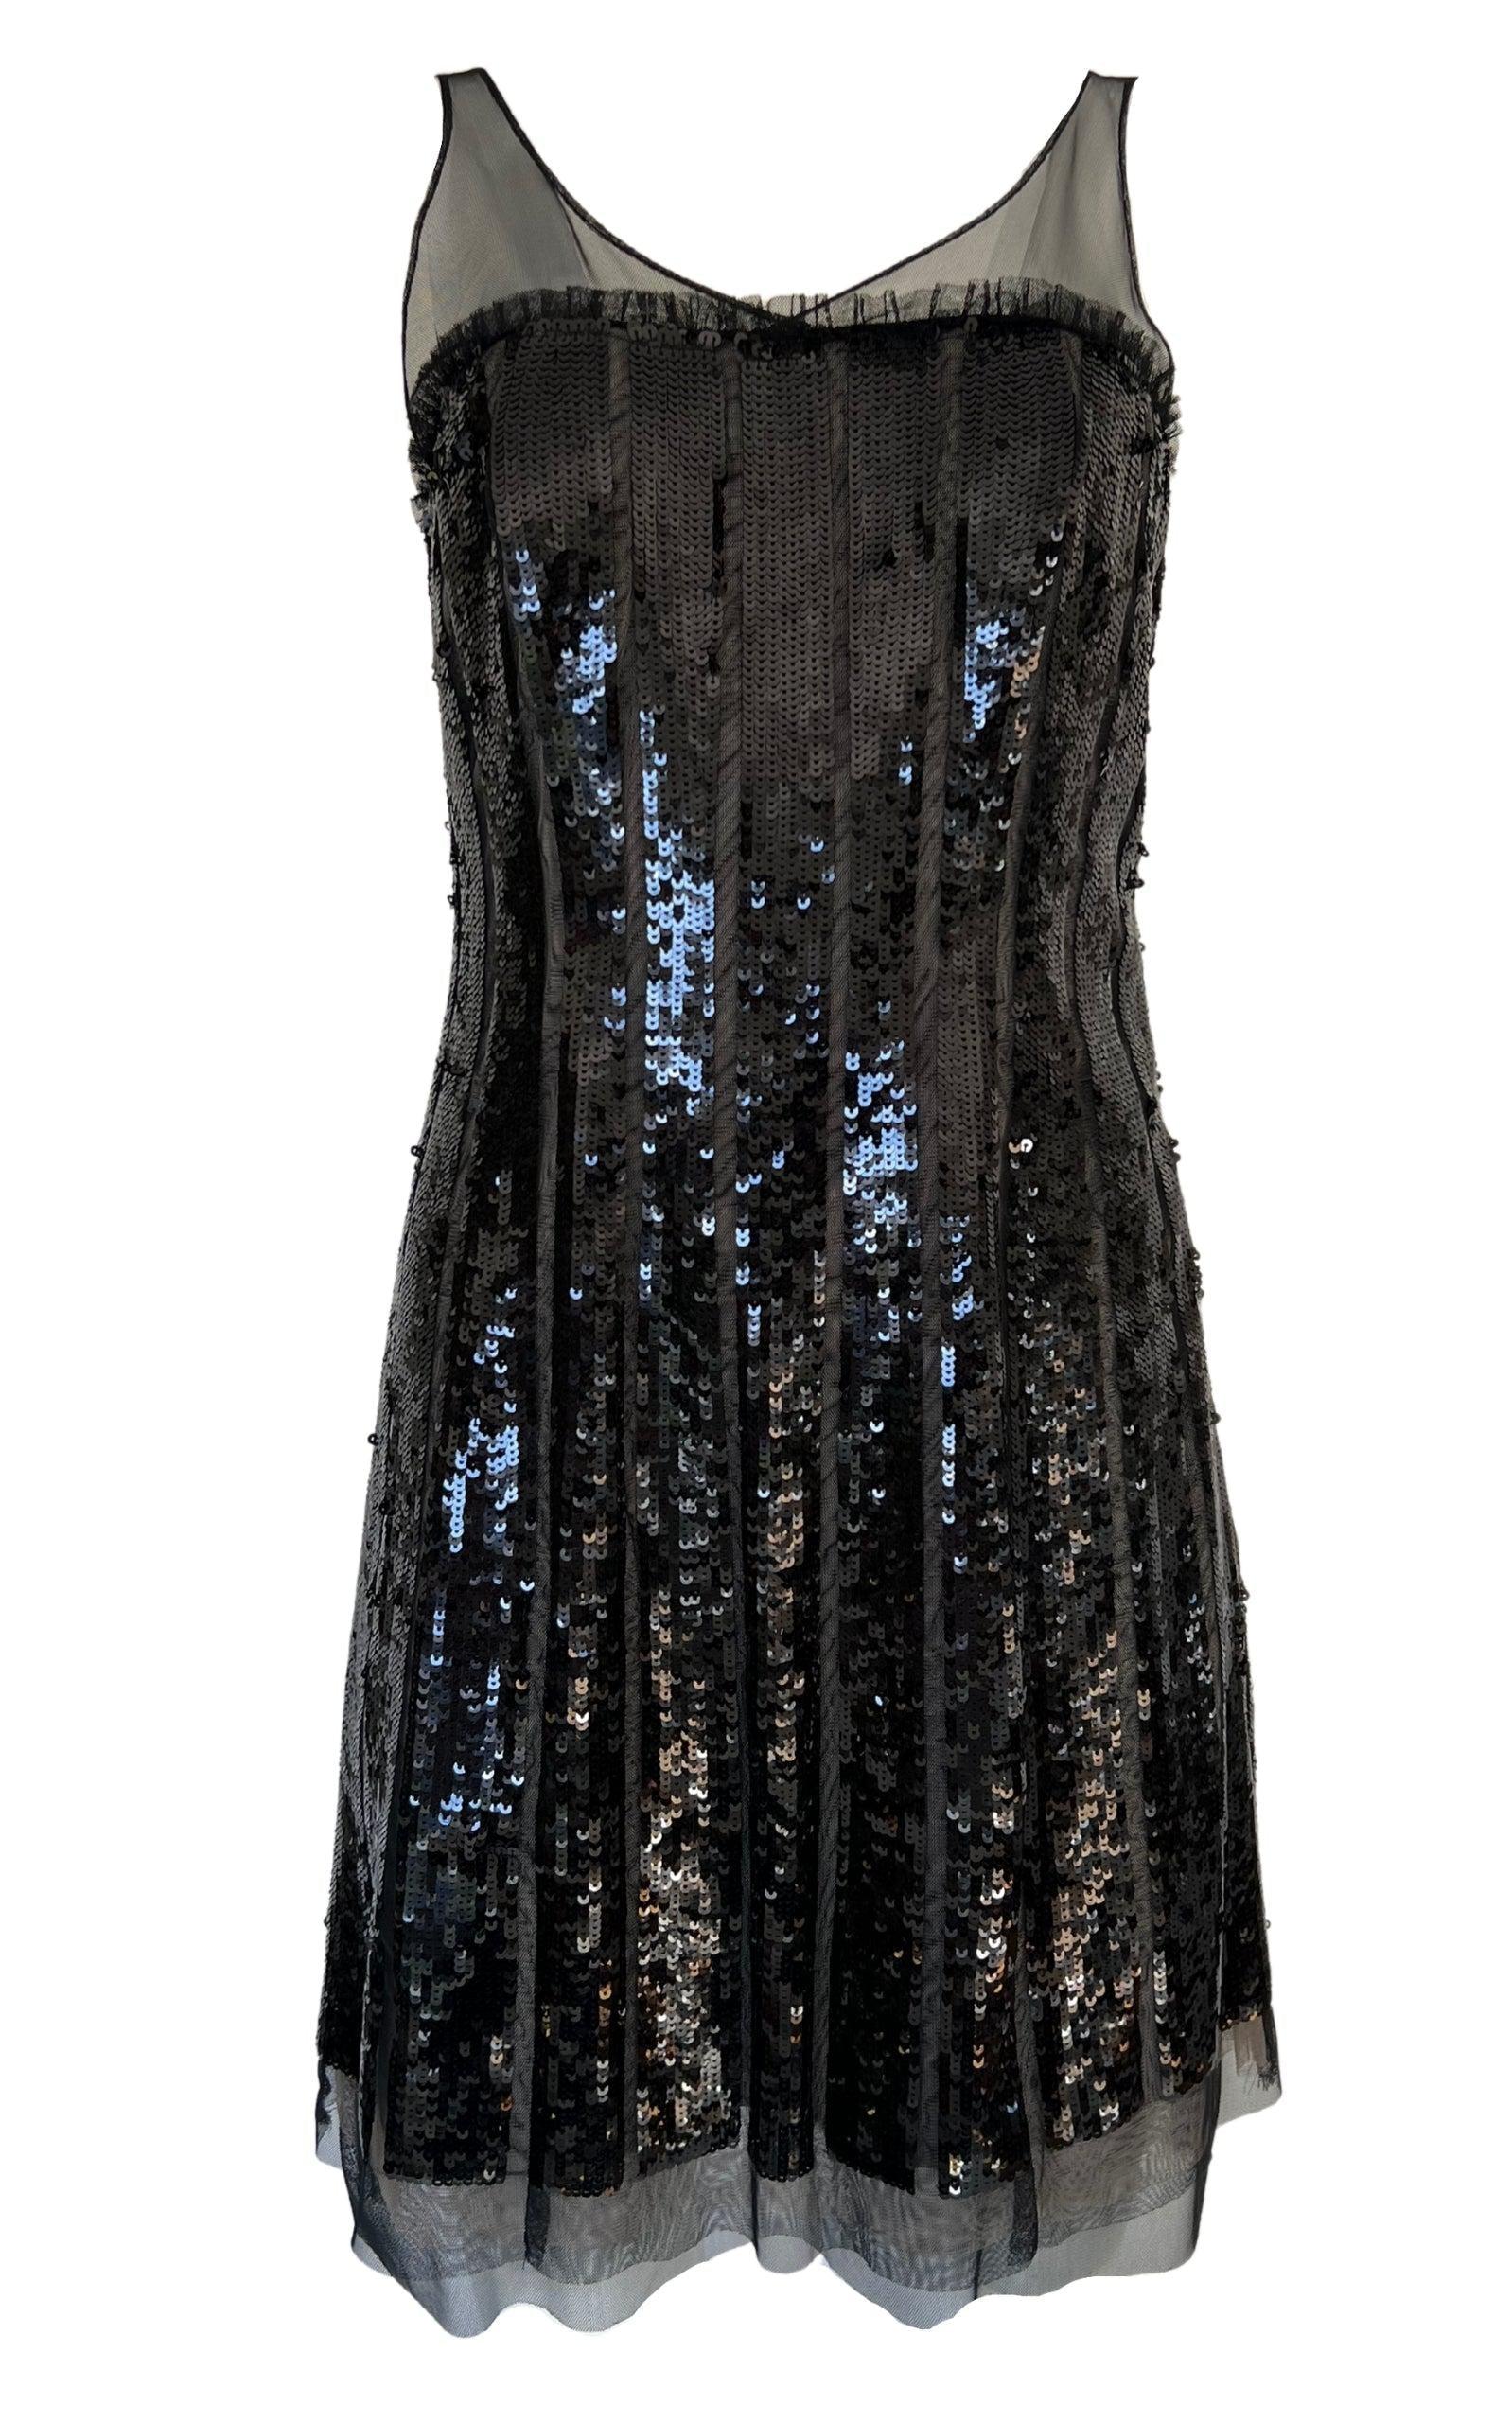  BCBGMAXAZRIACopy of Copy of Black Ruffle Cashmere Blend Dress - Runway Catalog